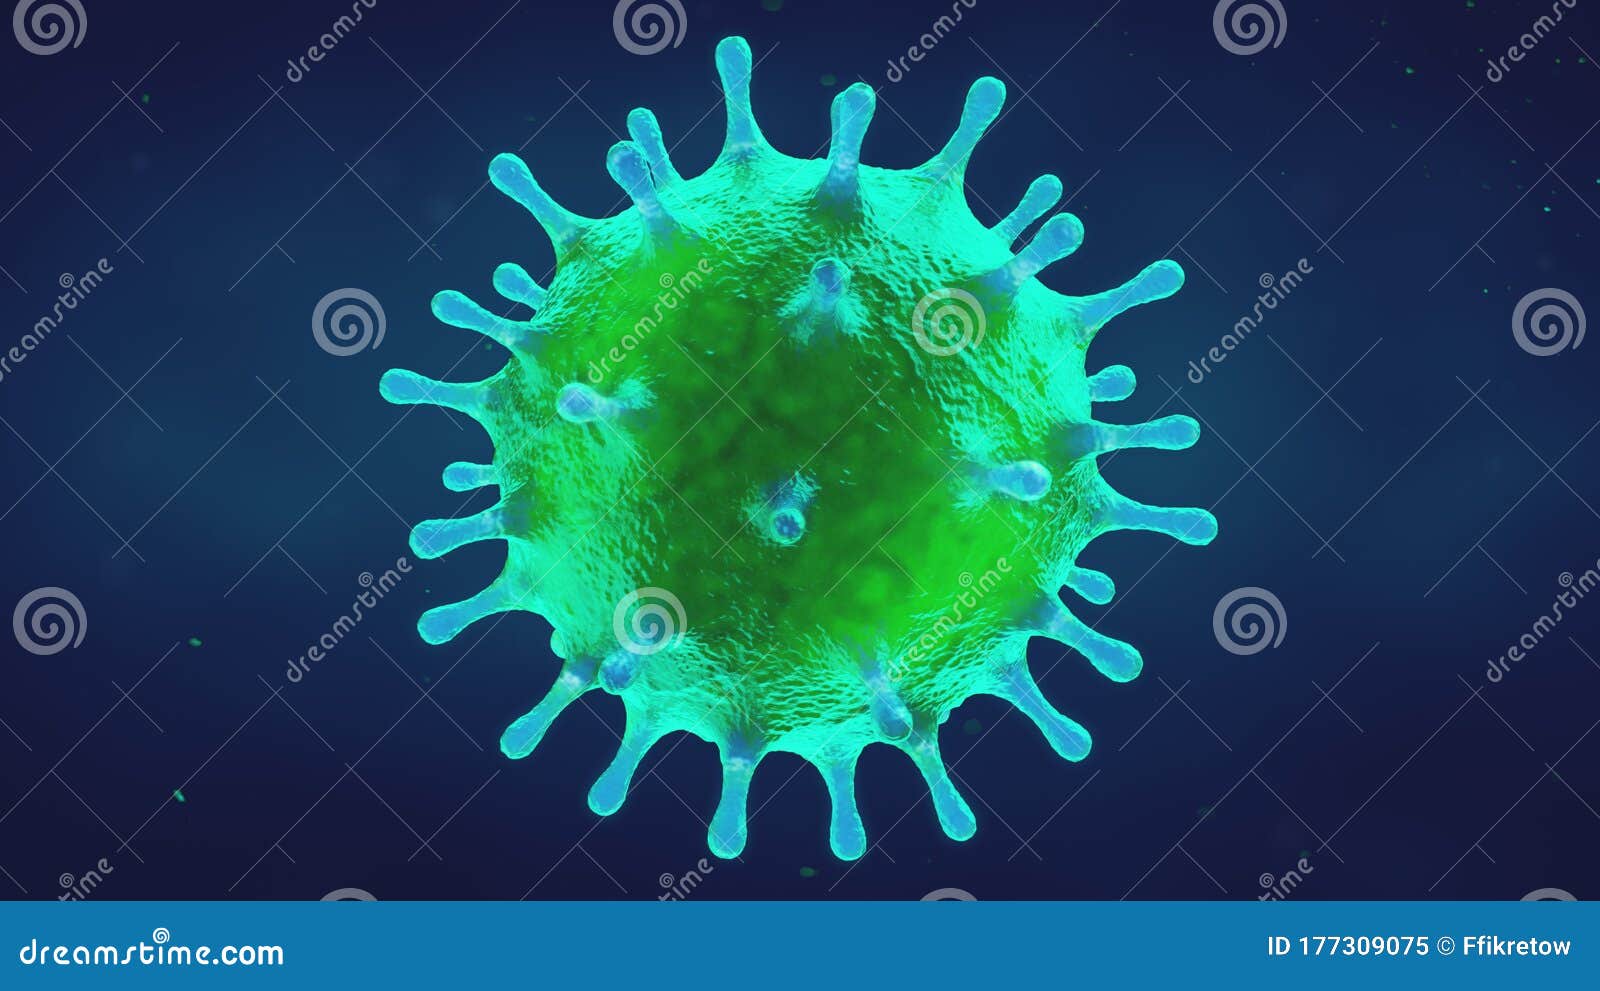 corona virus covid-19 concept image